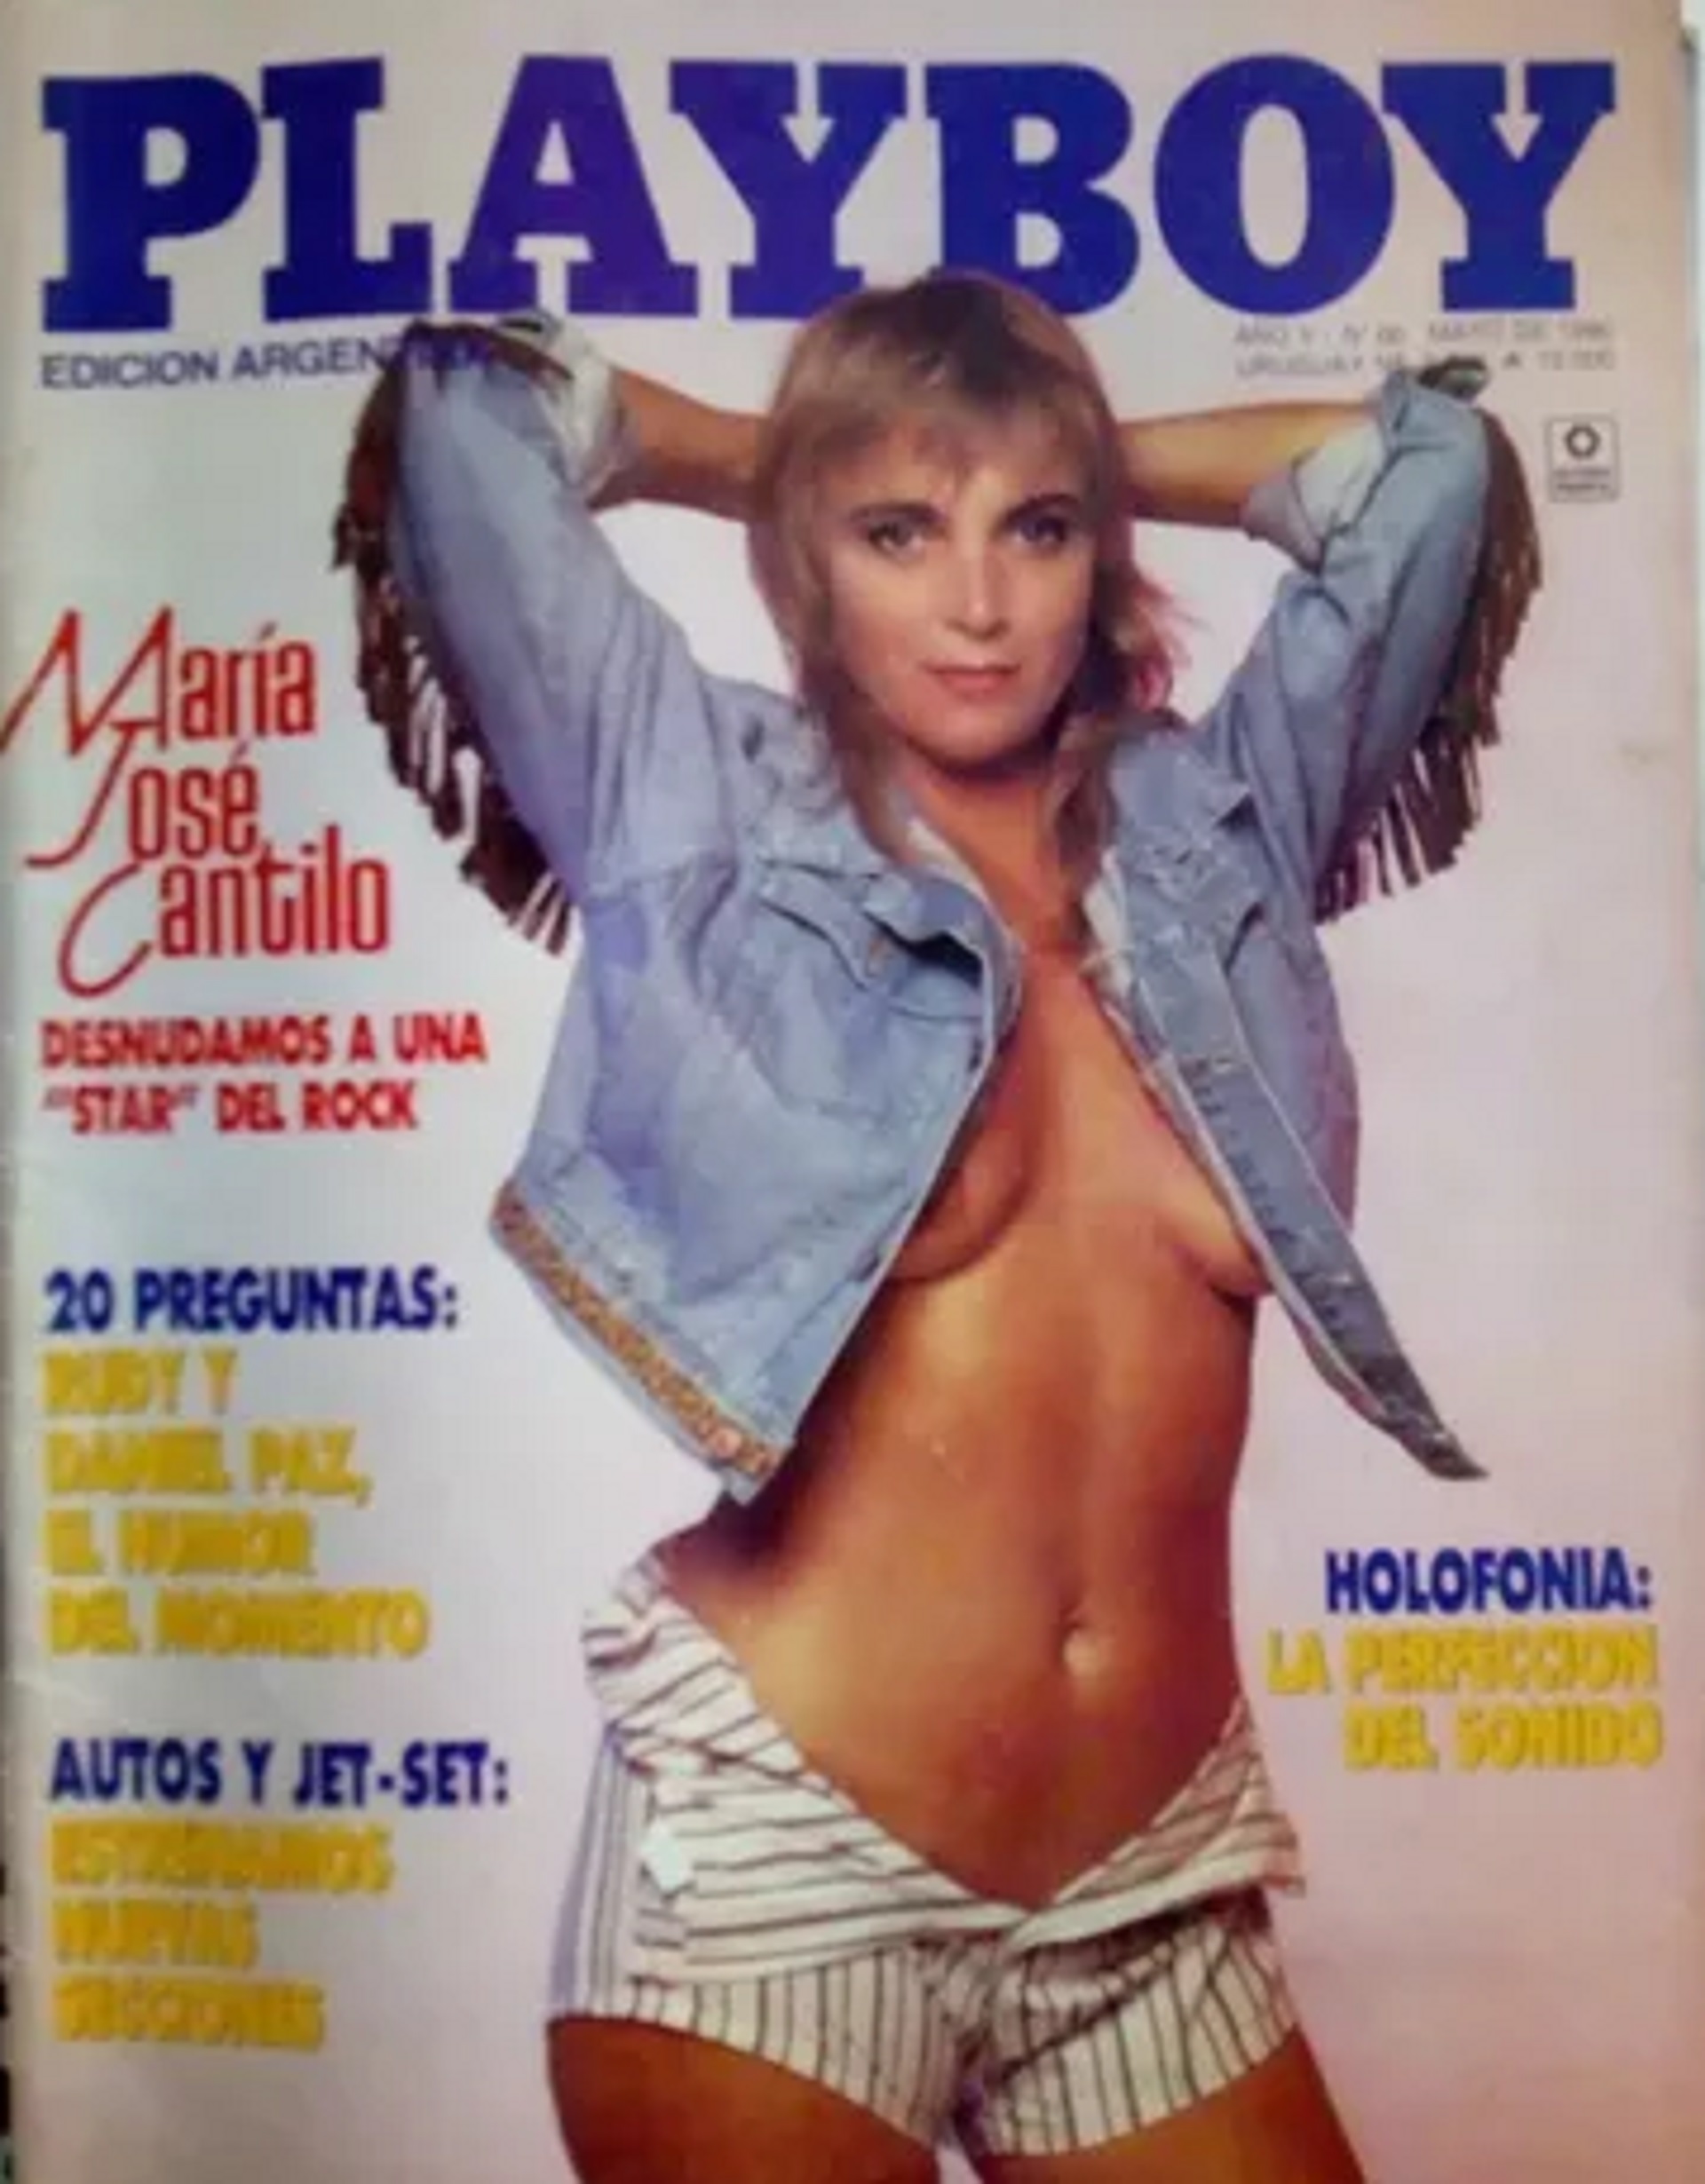 María José Cantilo was the cover of Playboy Argentina in May 1990